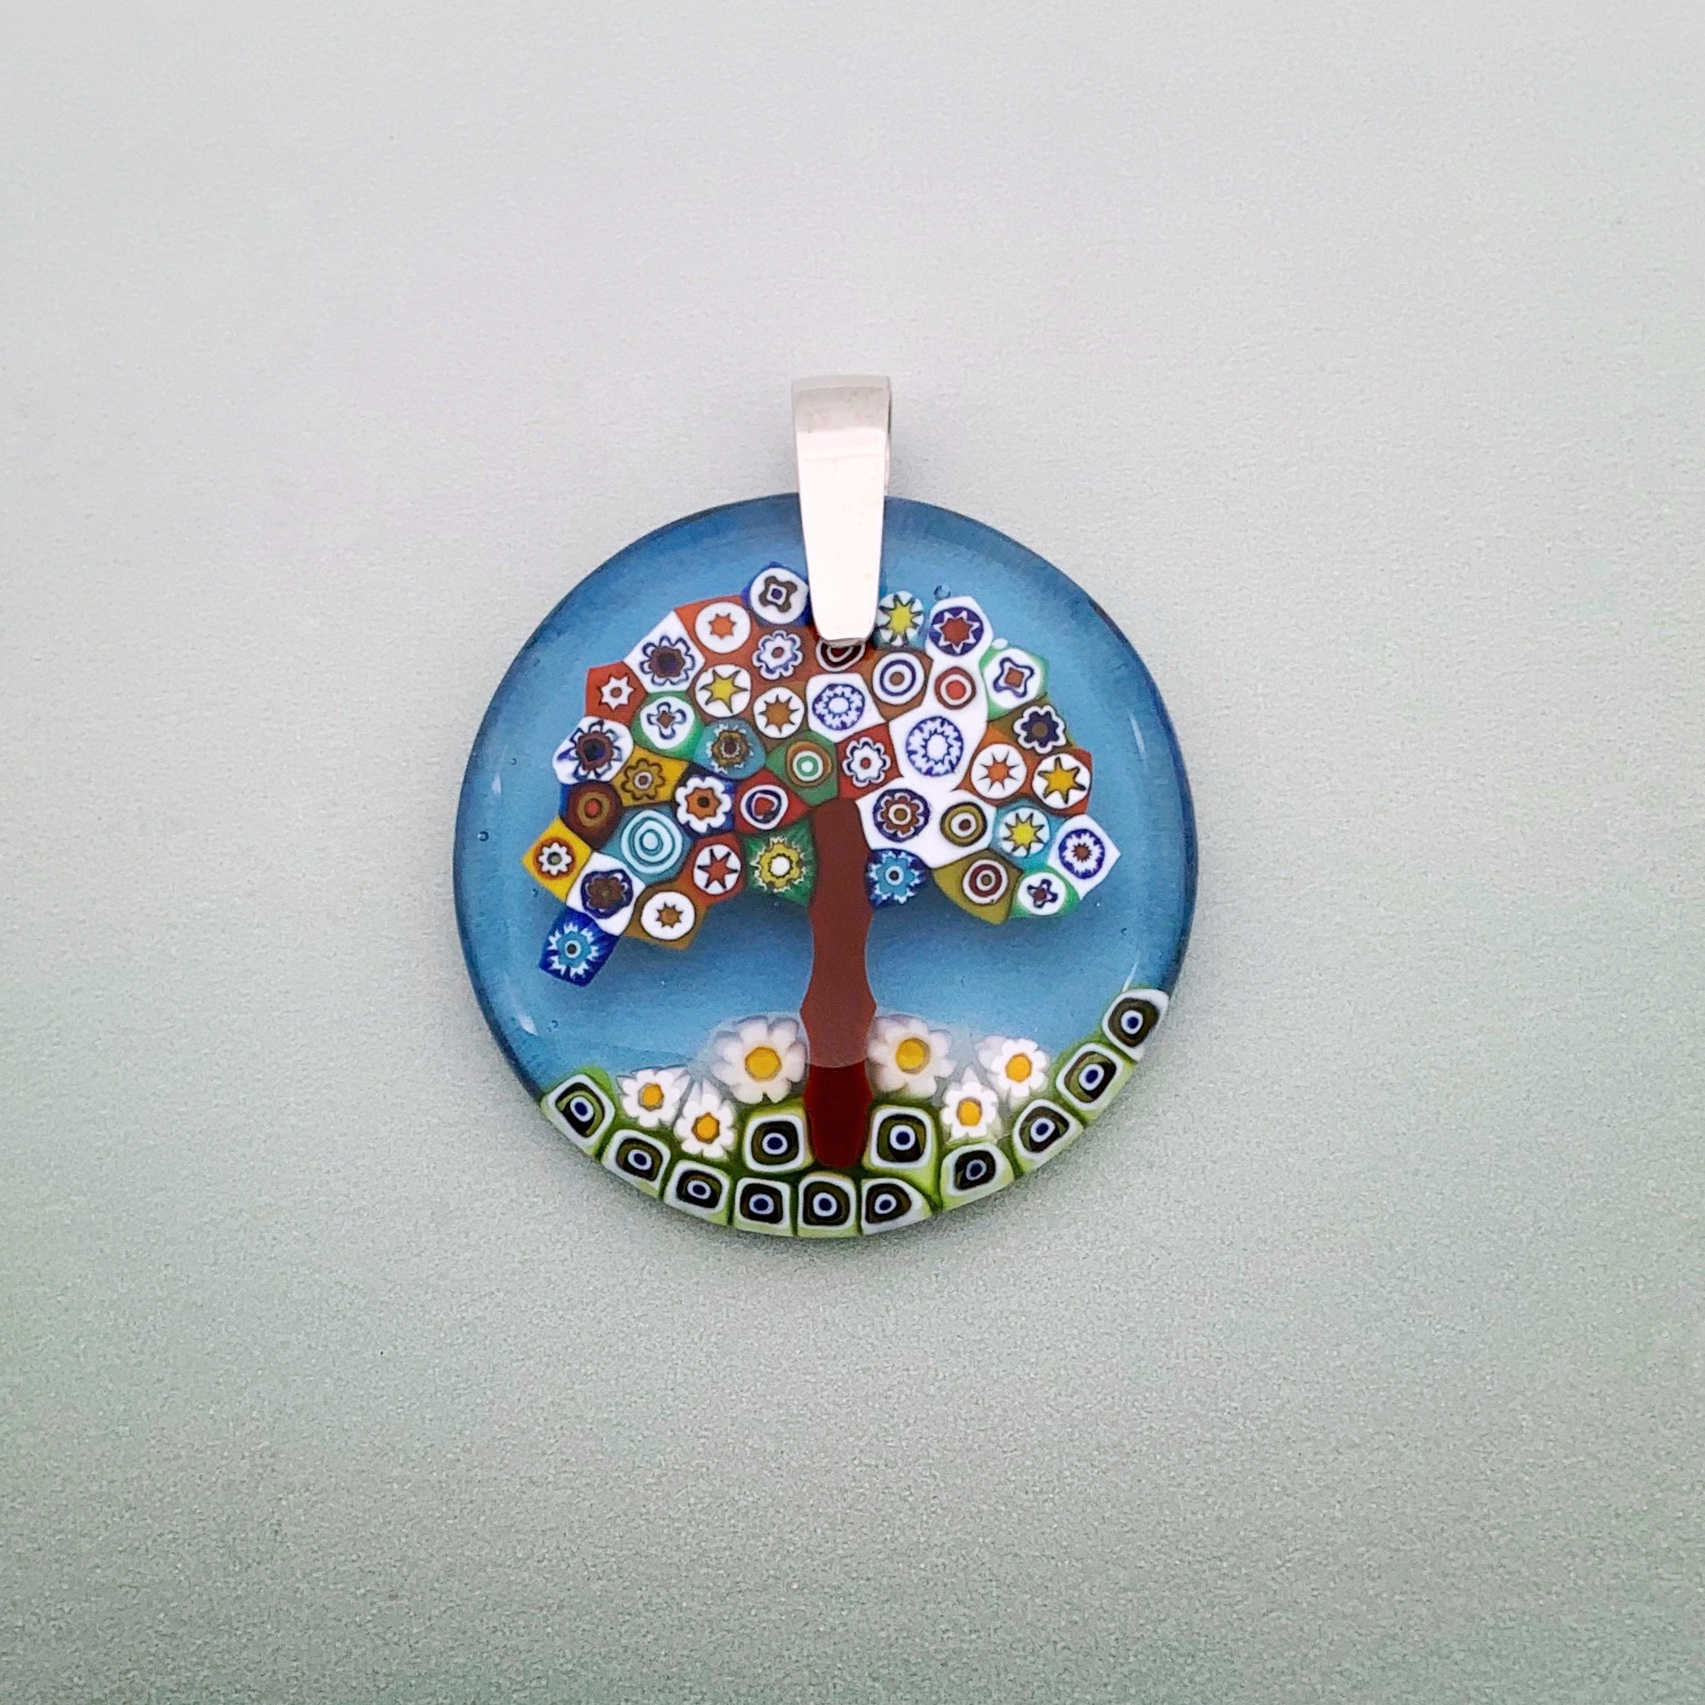 Fused blossom tree 35mm round glass pendant